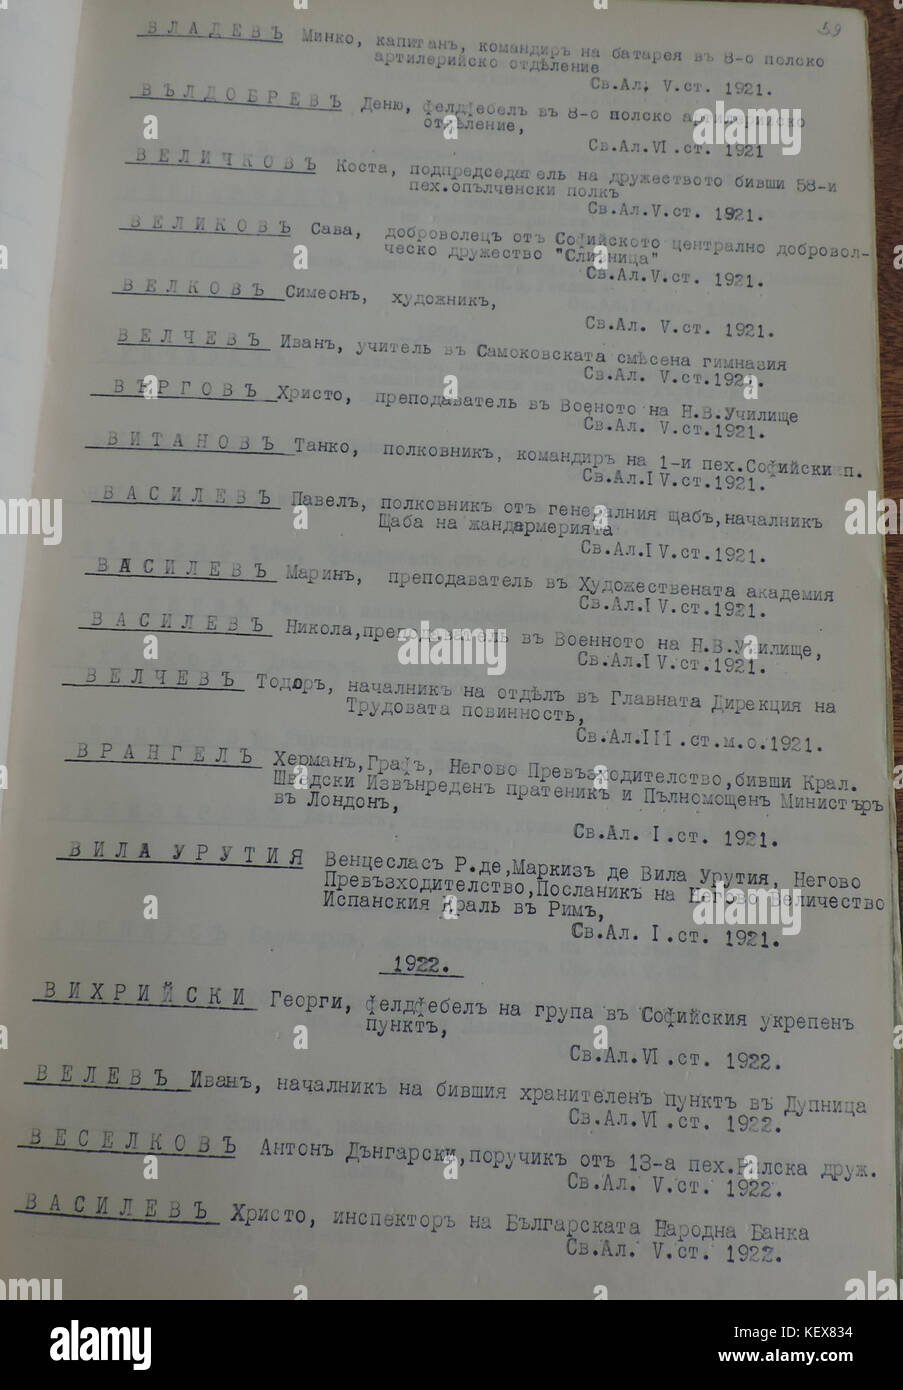 3K 2 123 59 Recipients of the Bulgarian Order of Saint Alexander, 1912 1935 Stock Photo